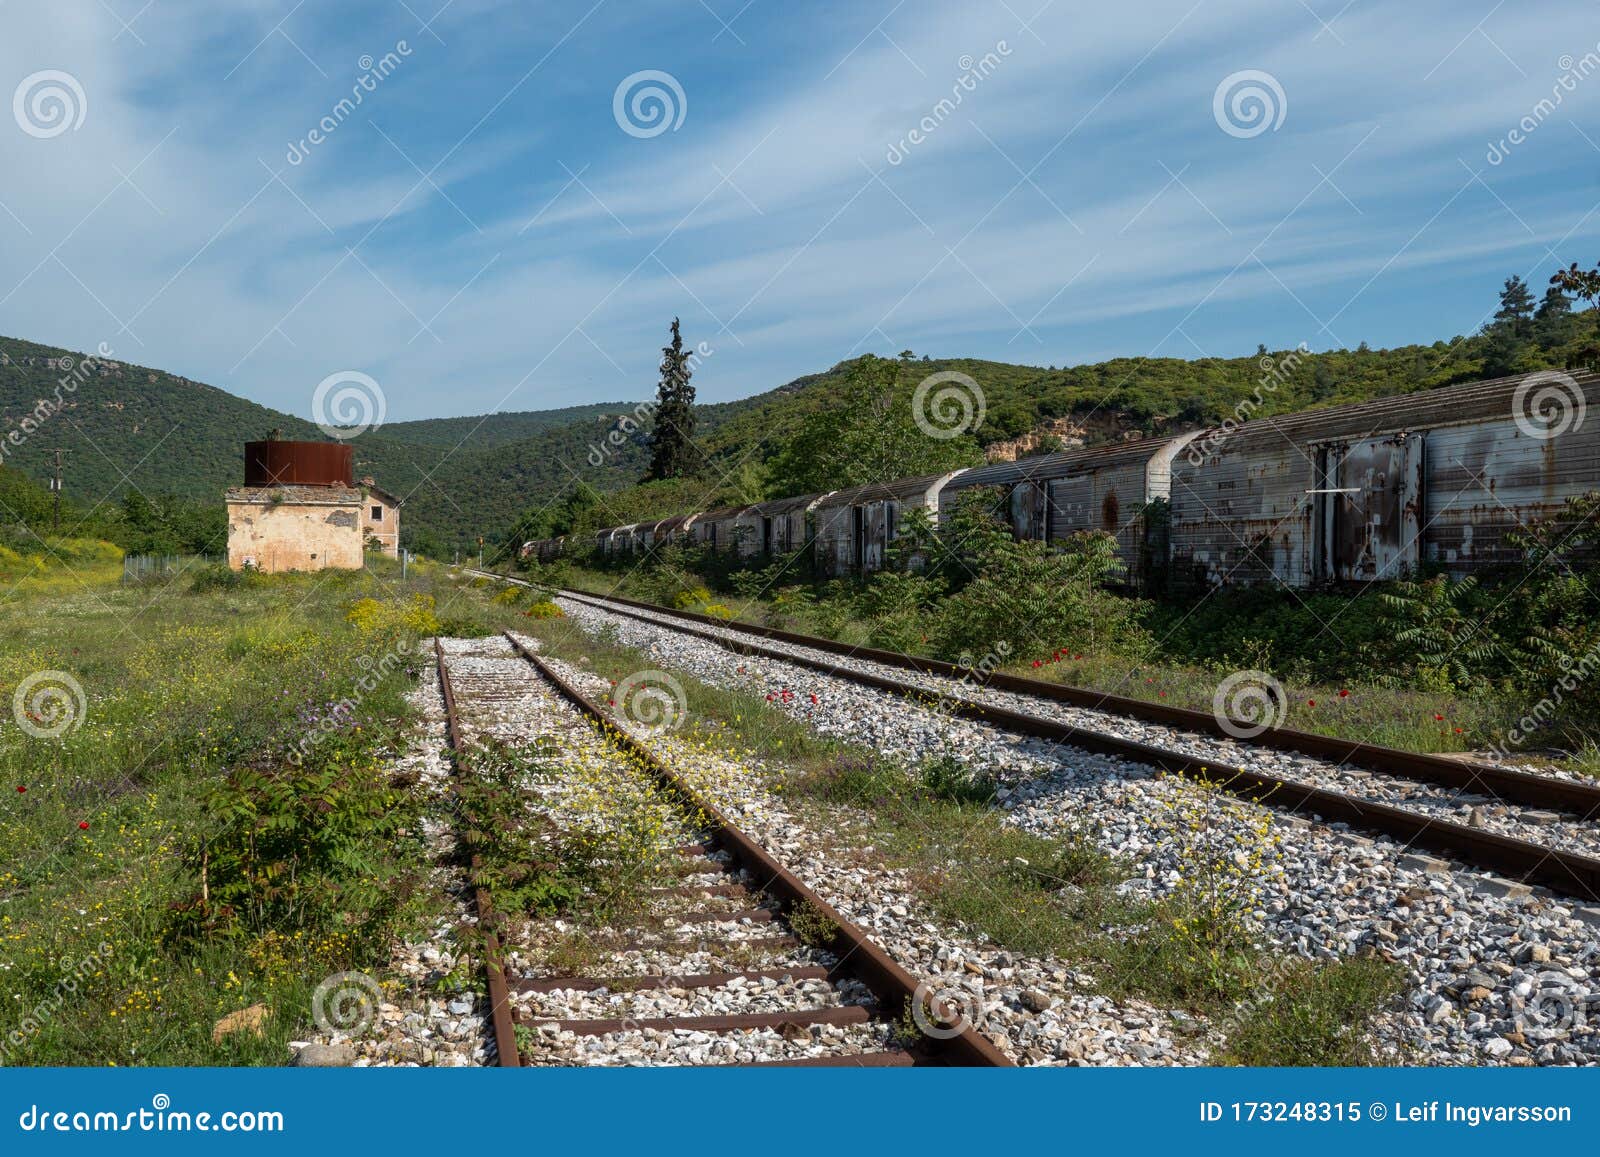 avas railway station in northern greece